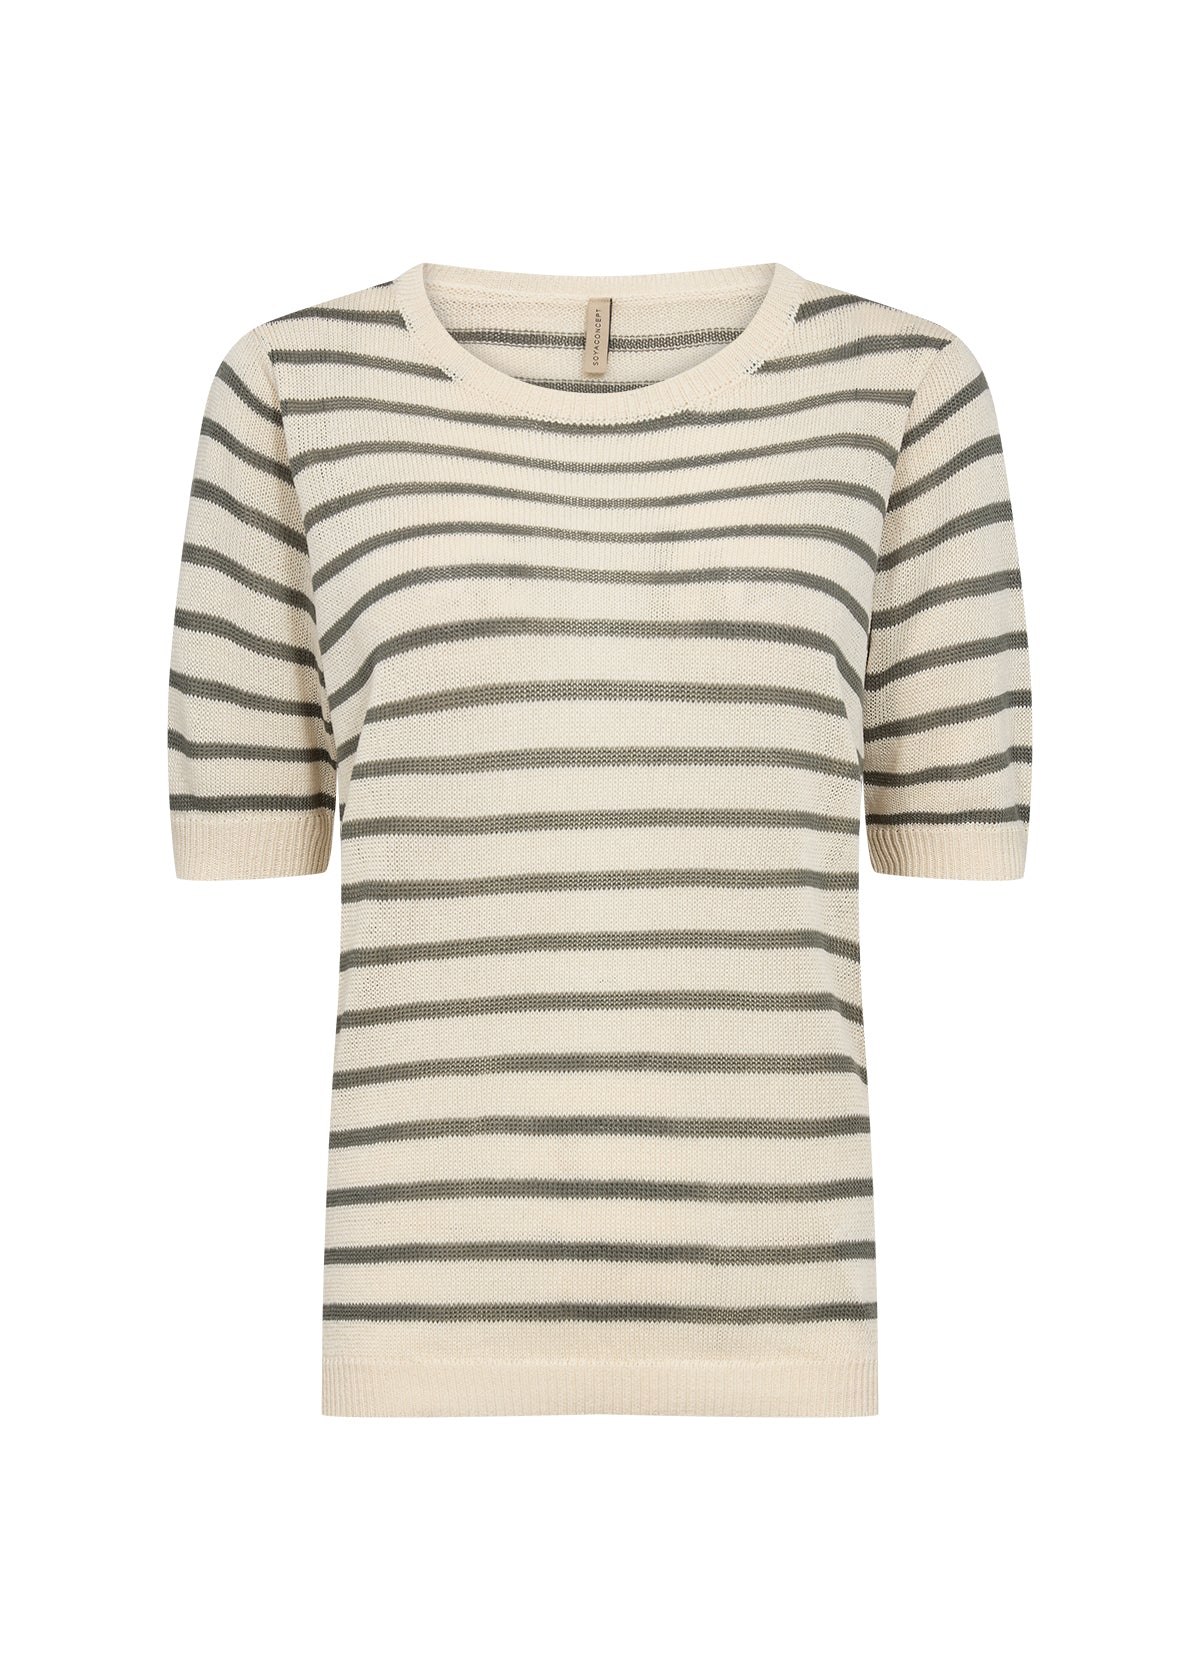 SOYA CONCEPT Luanna 1 Cream & Khaki Striped Shirt